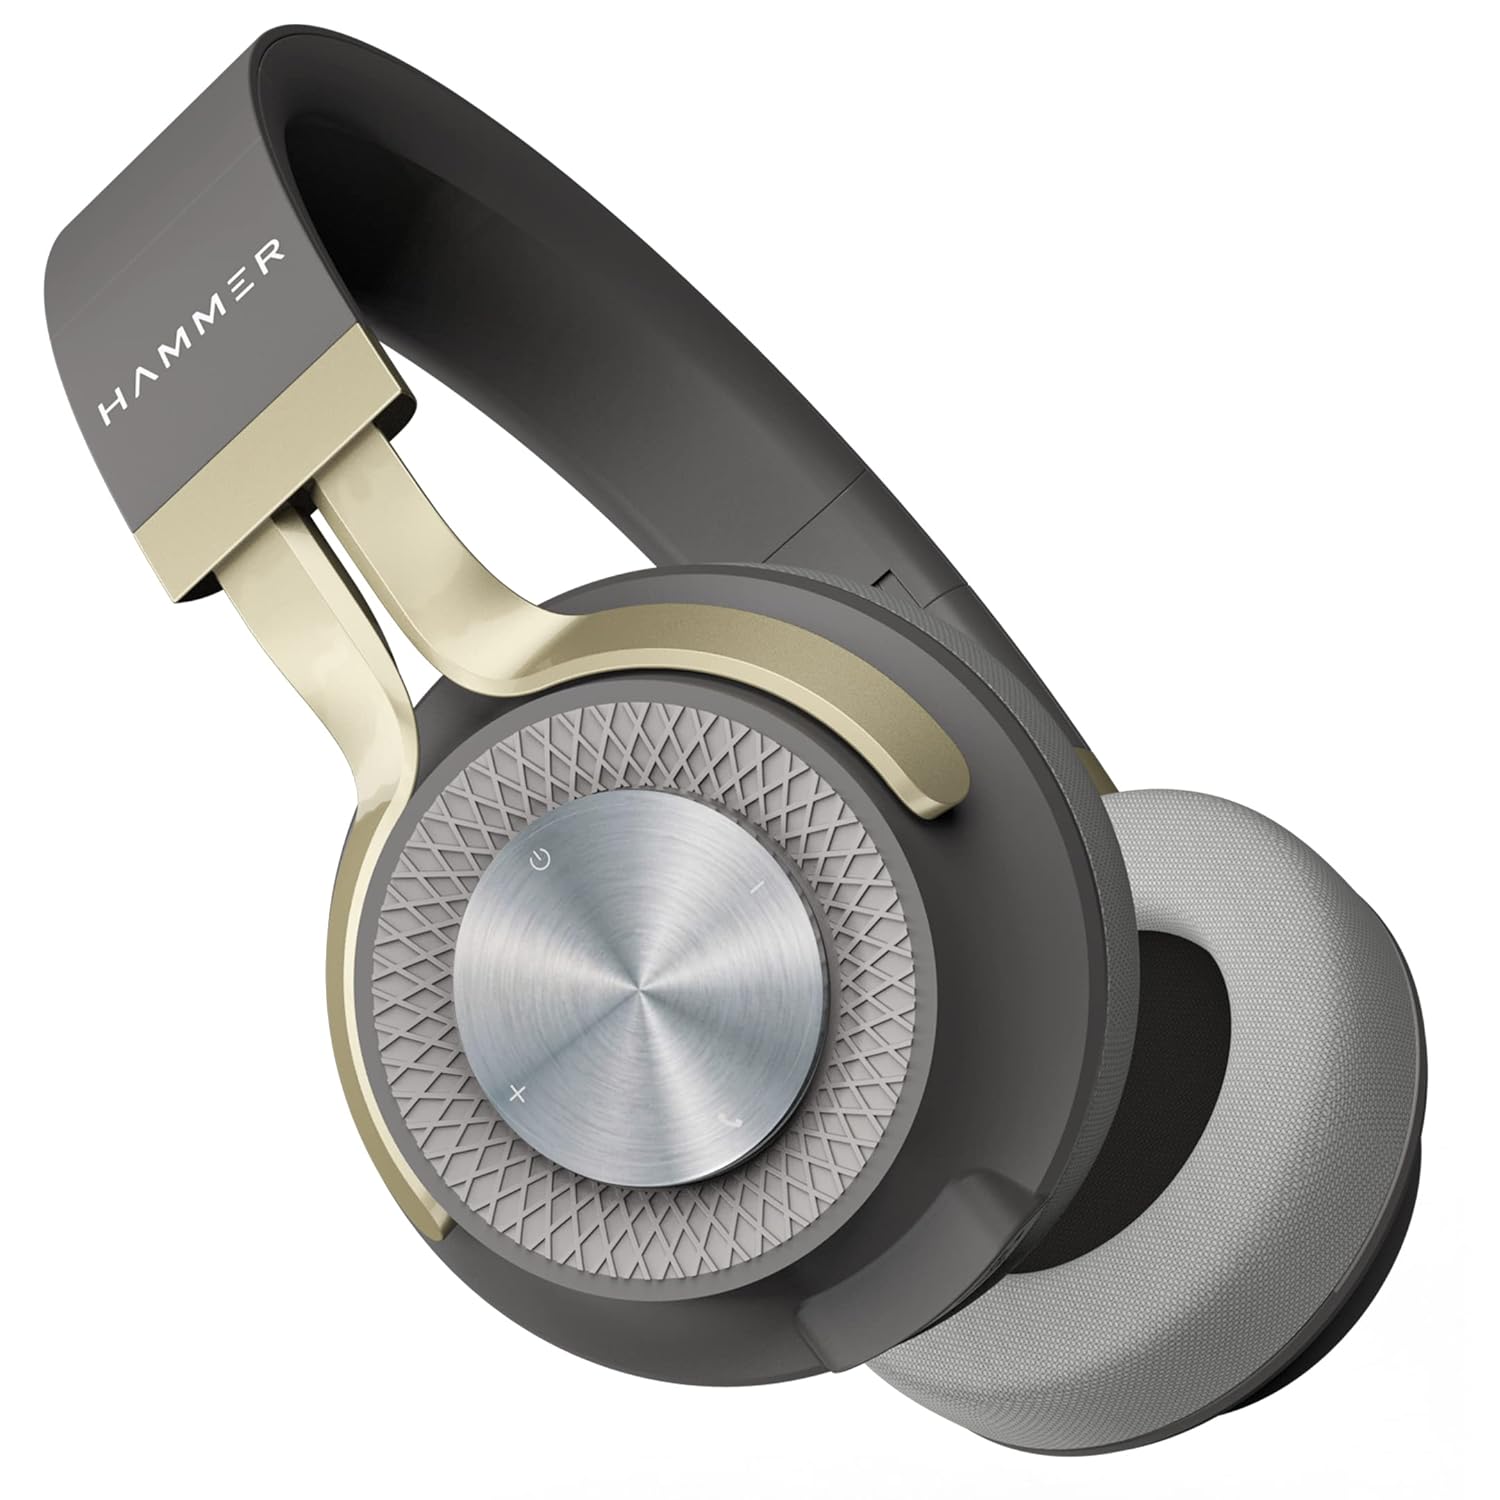 Hammer Bash 2.0 Over The Ear Wireless Bluetooth Headphones with Mic, Deep Bass, 